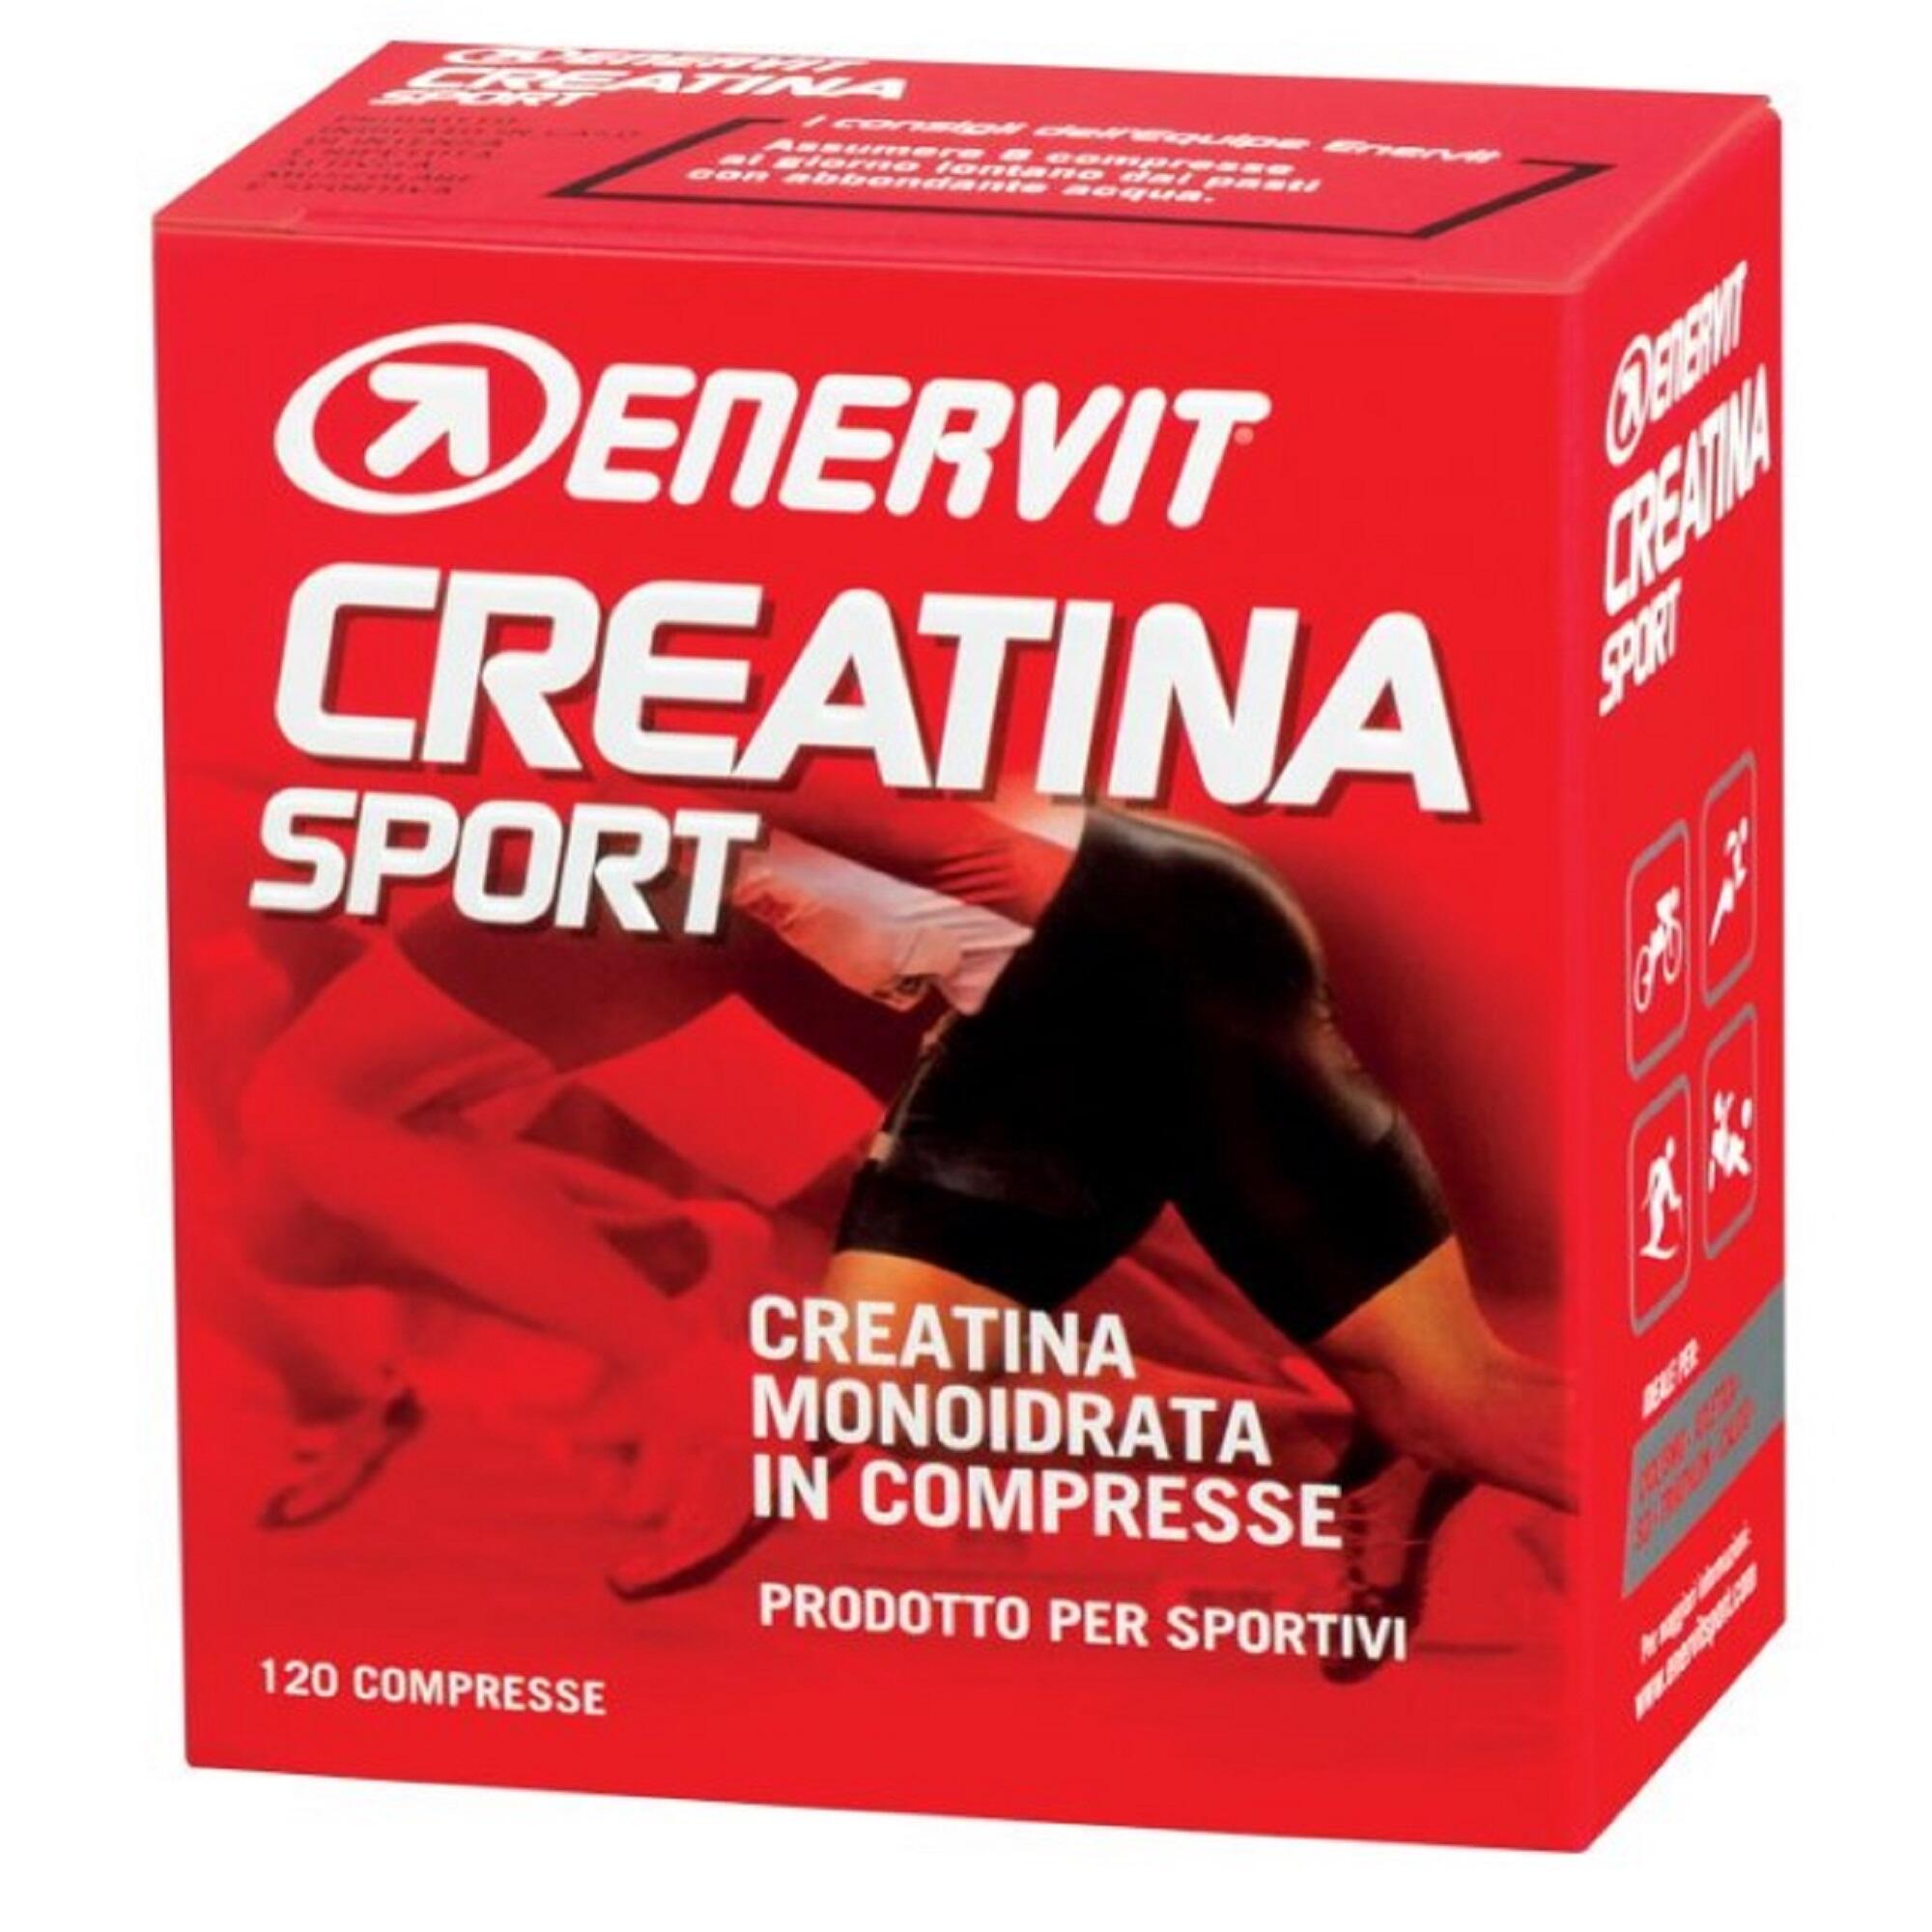 Decathlon | Creatina Enervit monoidrata in compresse Creatina Sport 120 compresse |  Enervit